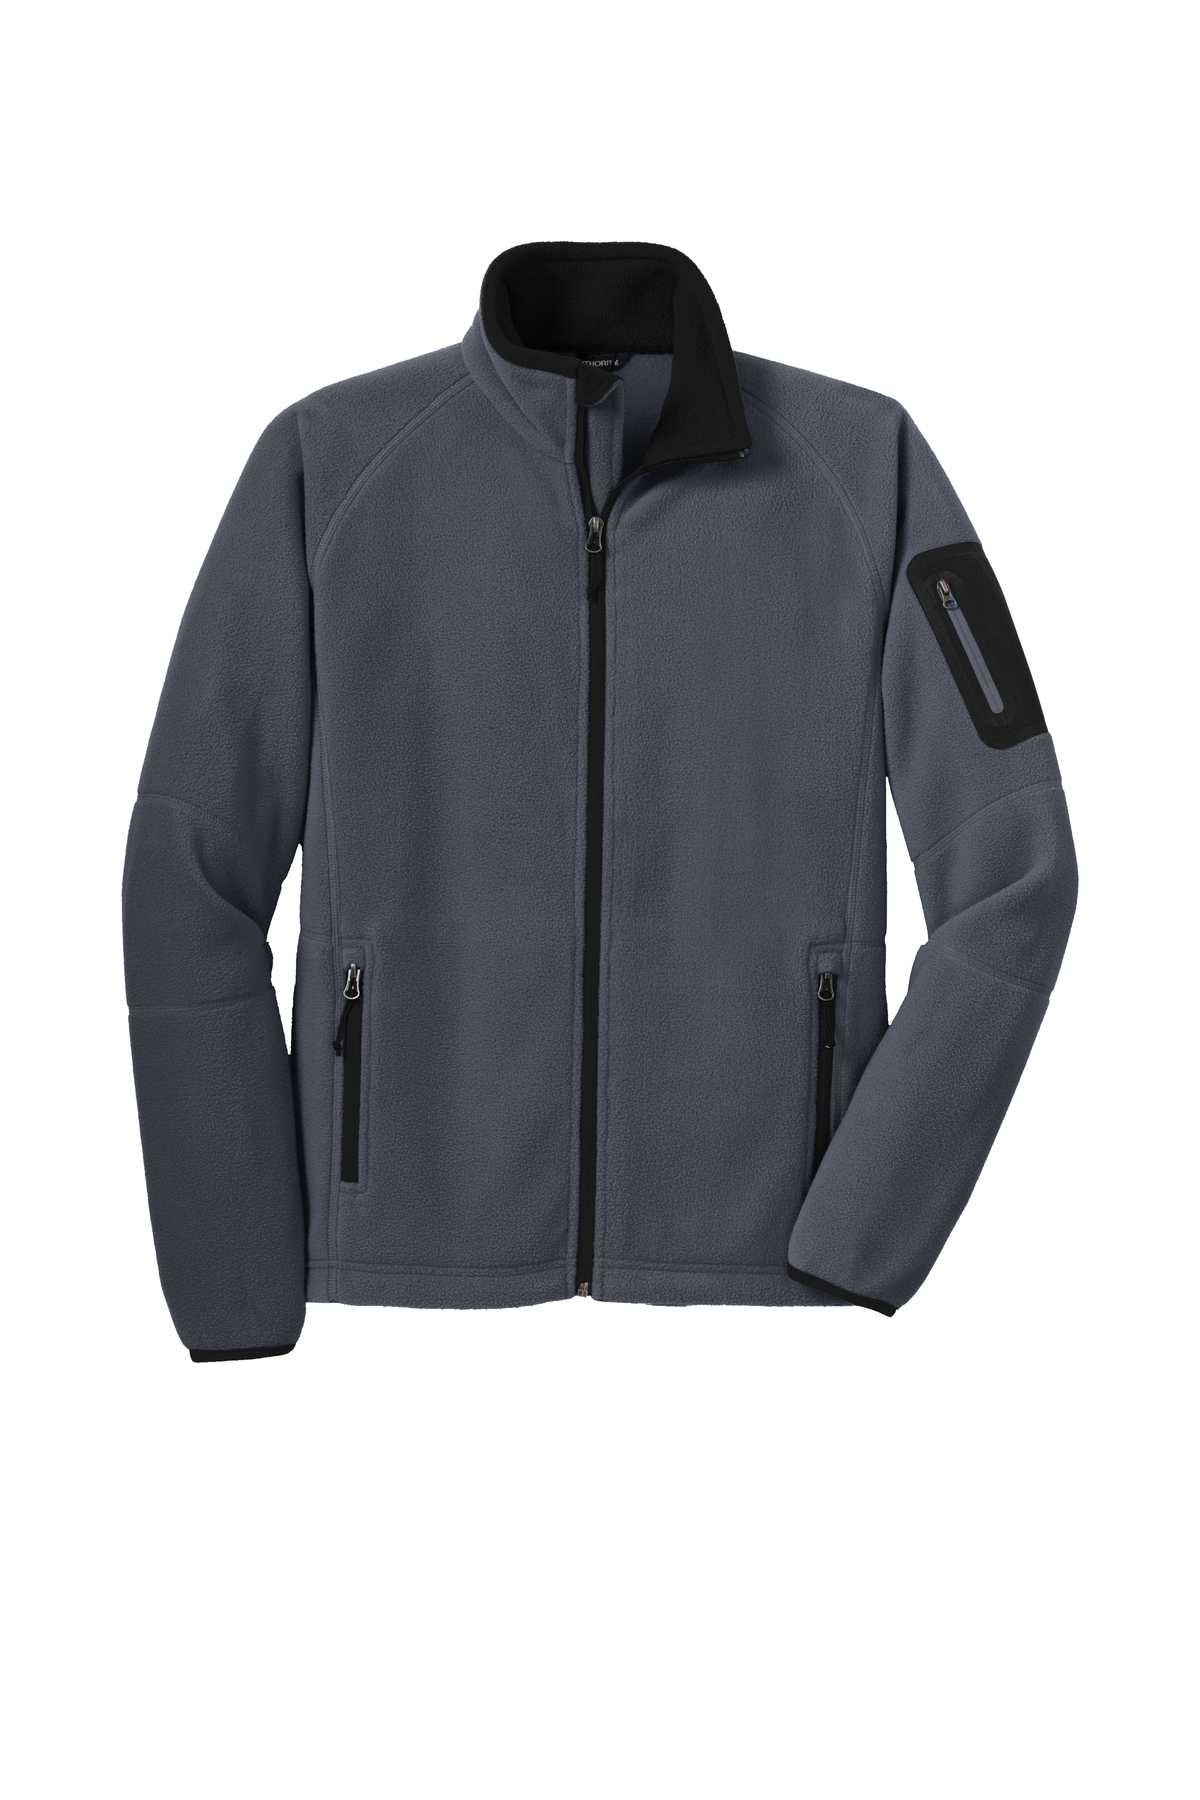 Port Authority Enhanced Value Fleece Full-Zip Jacket, Product